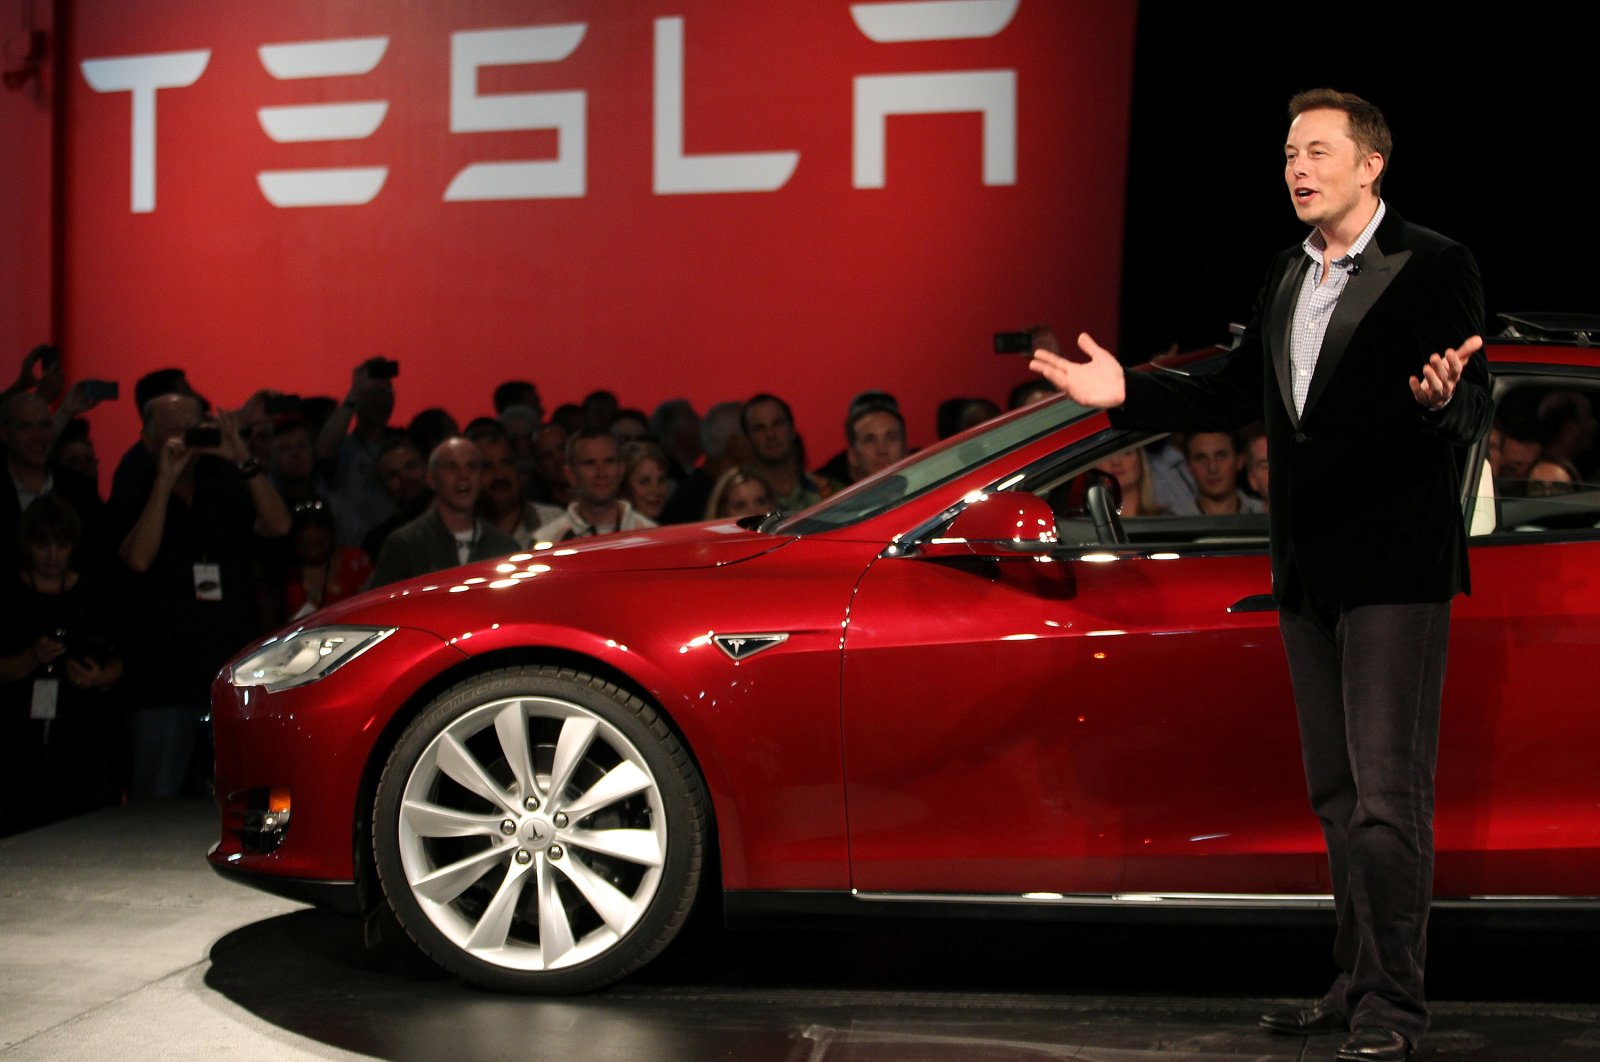 Kapitalisasi pasar Tesla turun di bawah $ 1 triliun setelah tweet Musk